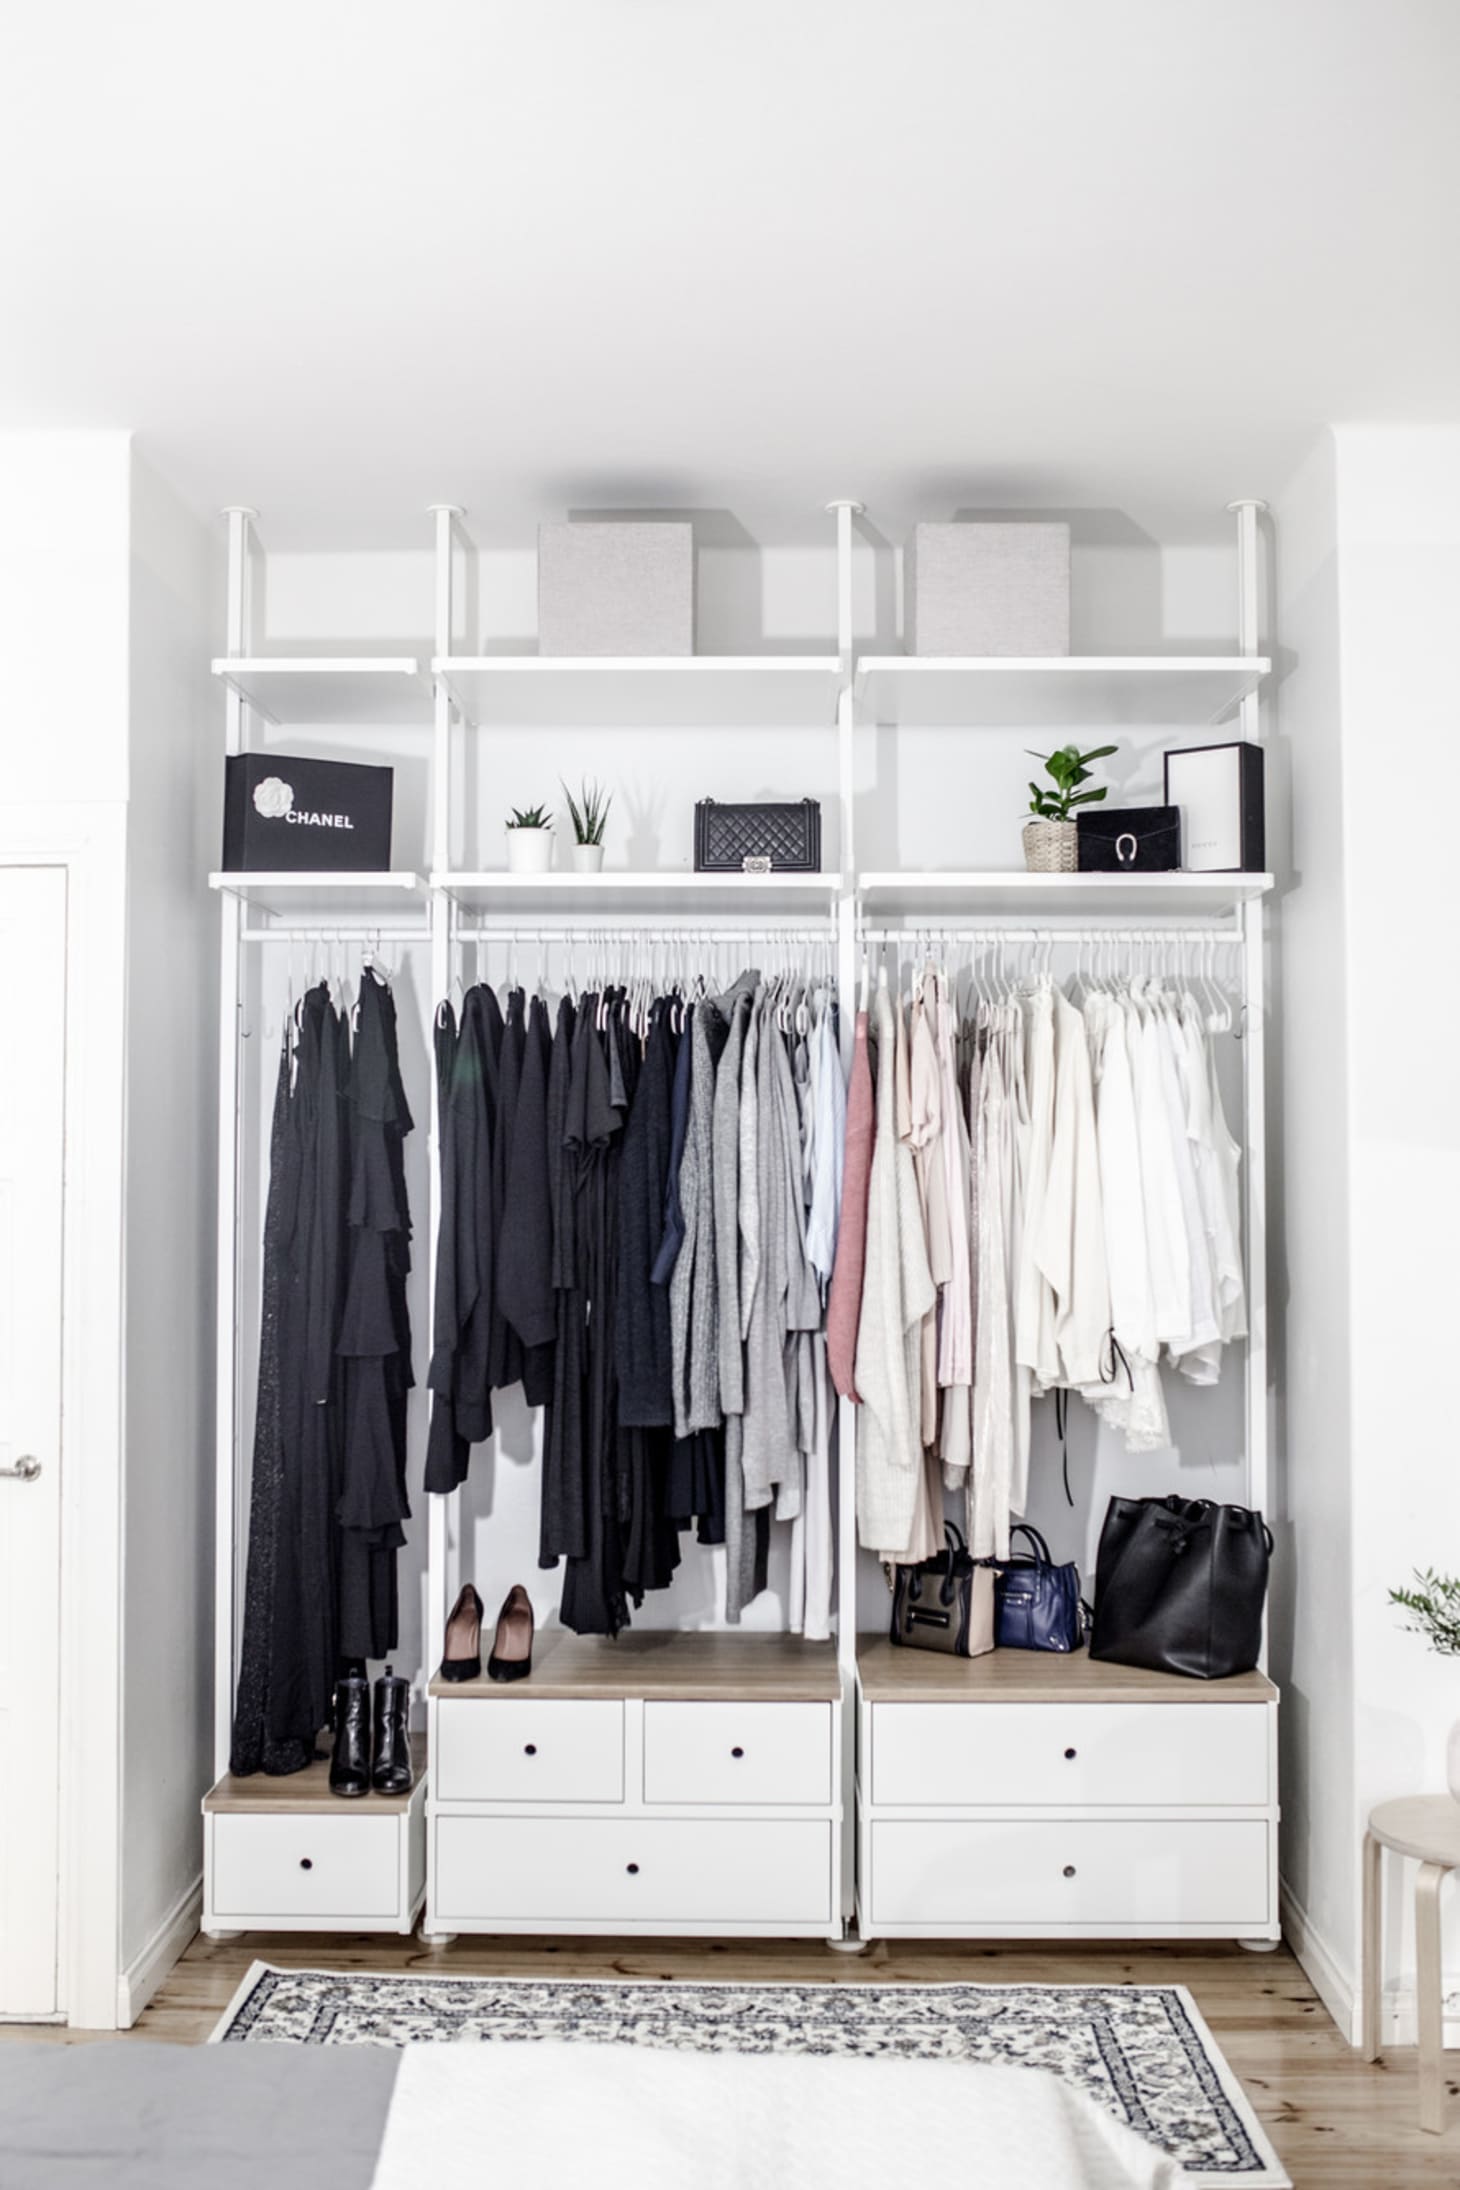 IKEA Closets to Create a Custom Closet Look | Apartment ...